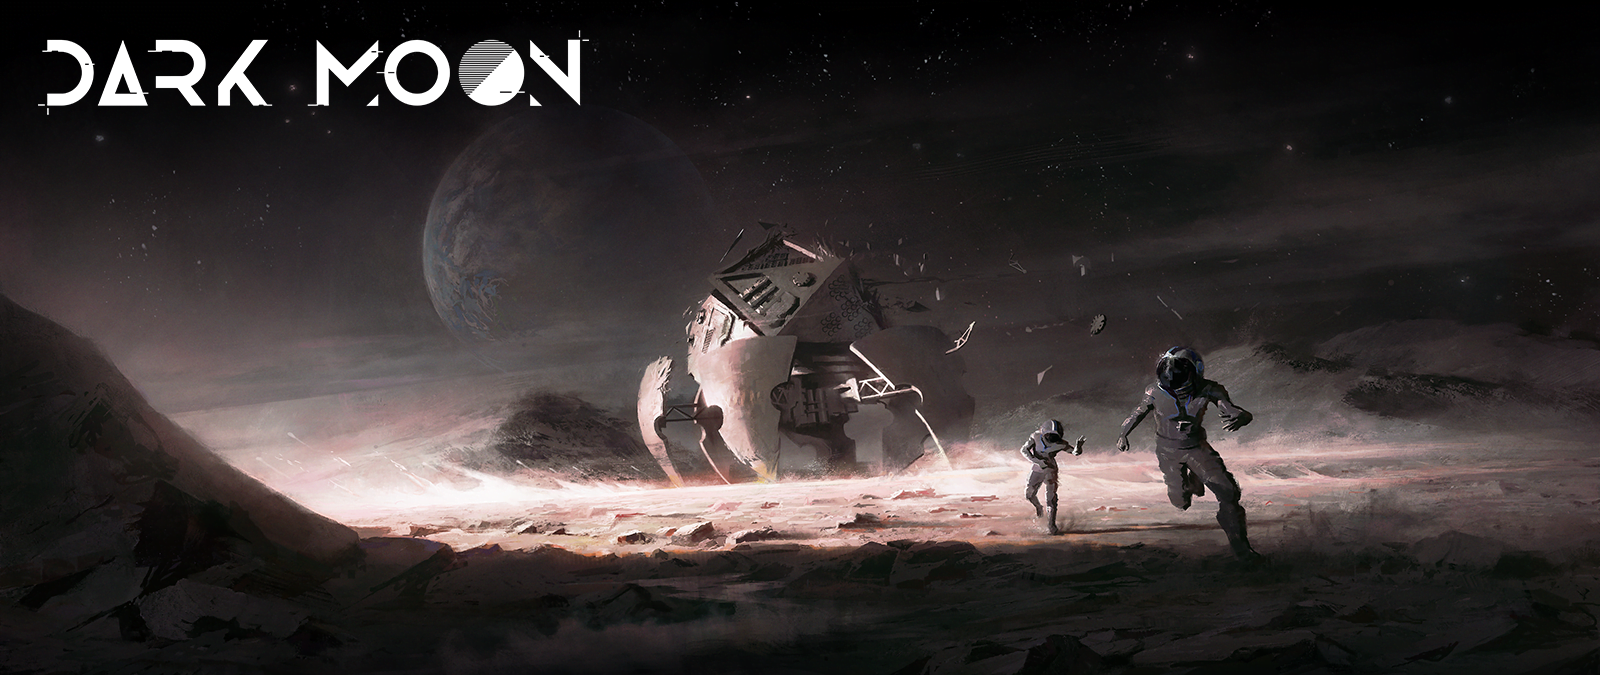 Dark moon lançamento oficialmente anunciado! | dark moon key art with logo | single player | dark moon lançamento single player